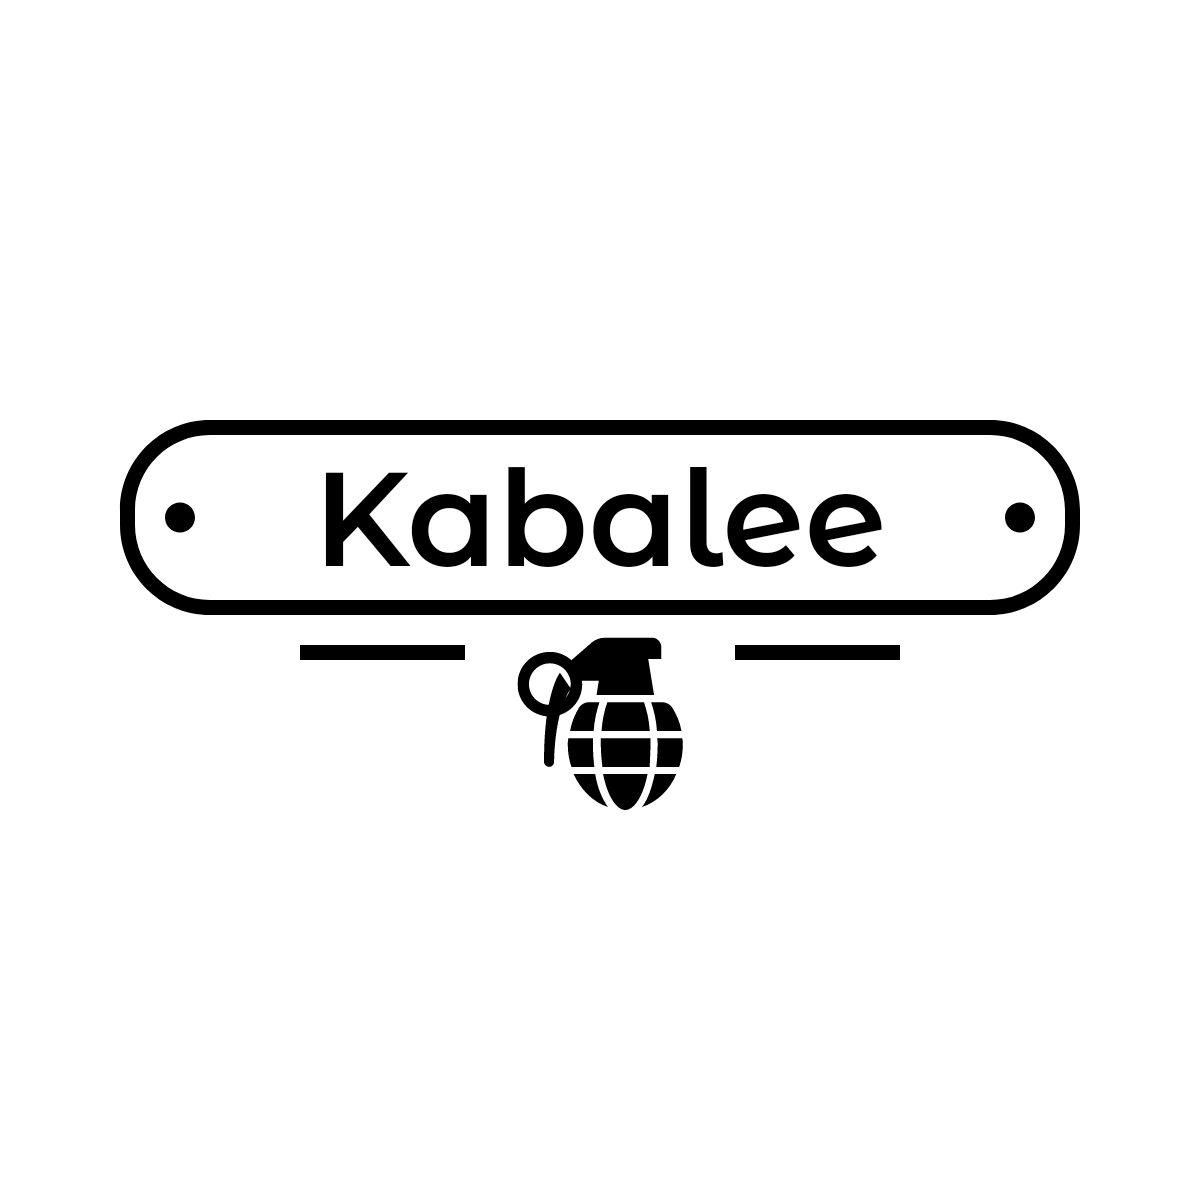 Kabalee